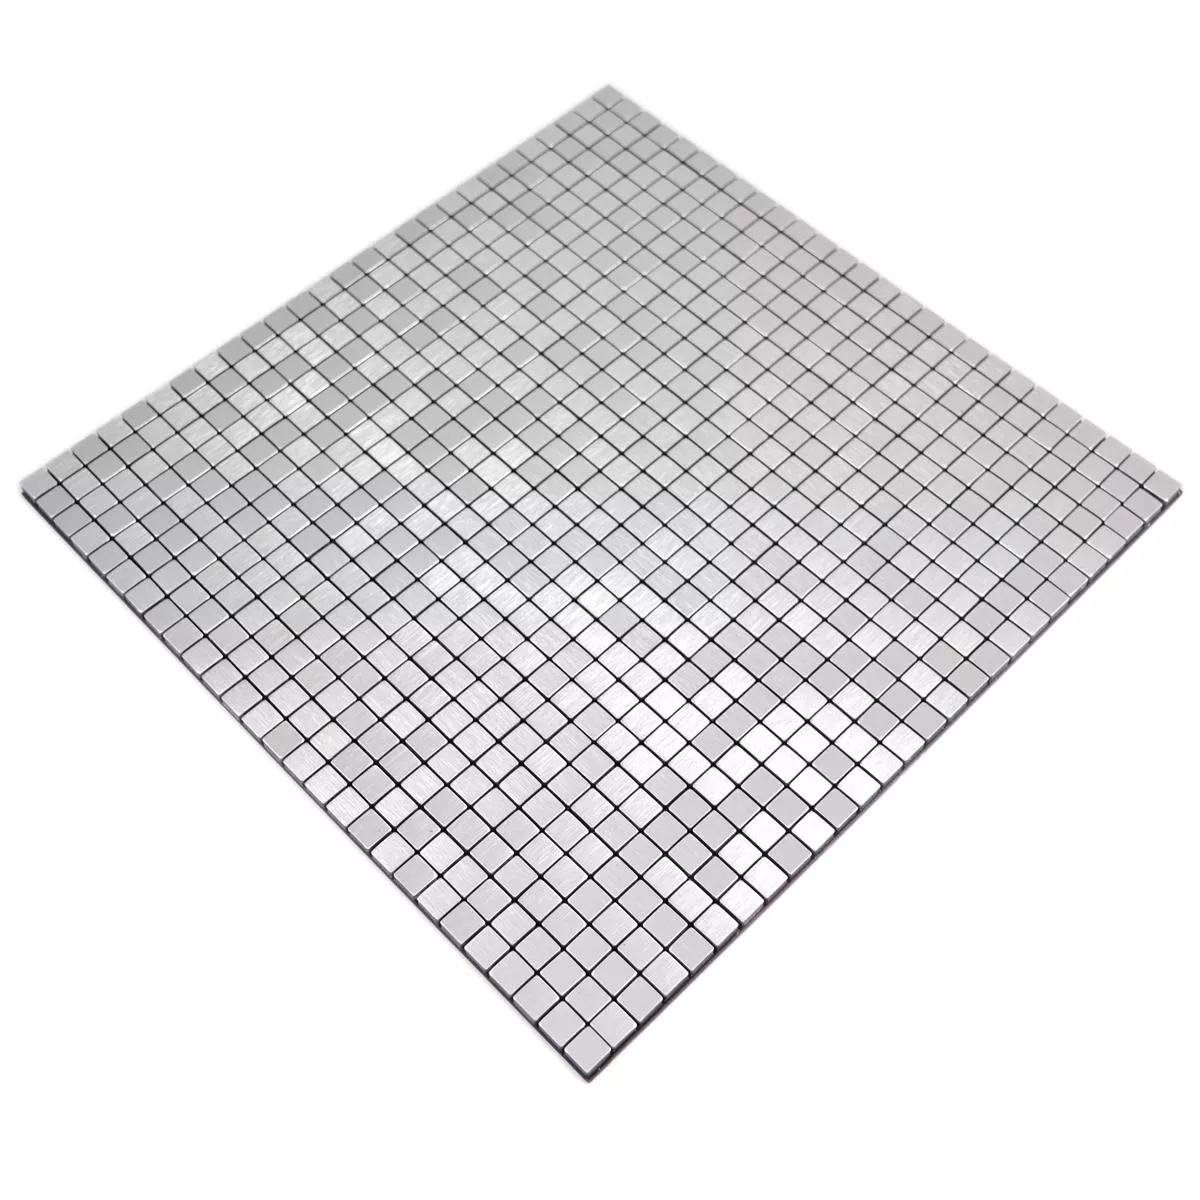 Metall Mosaikfliesen Wygon Selbstklebend Silber 10mm